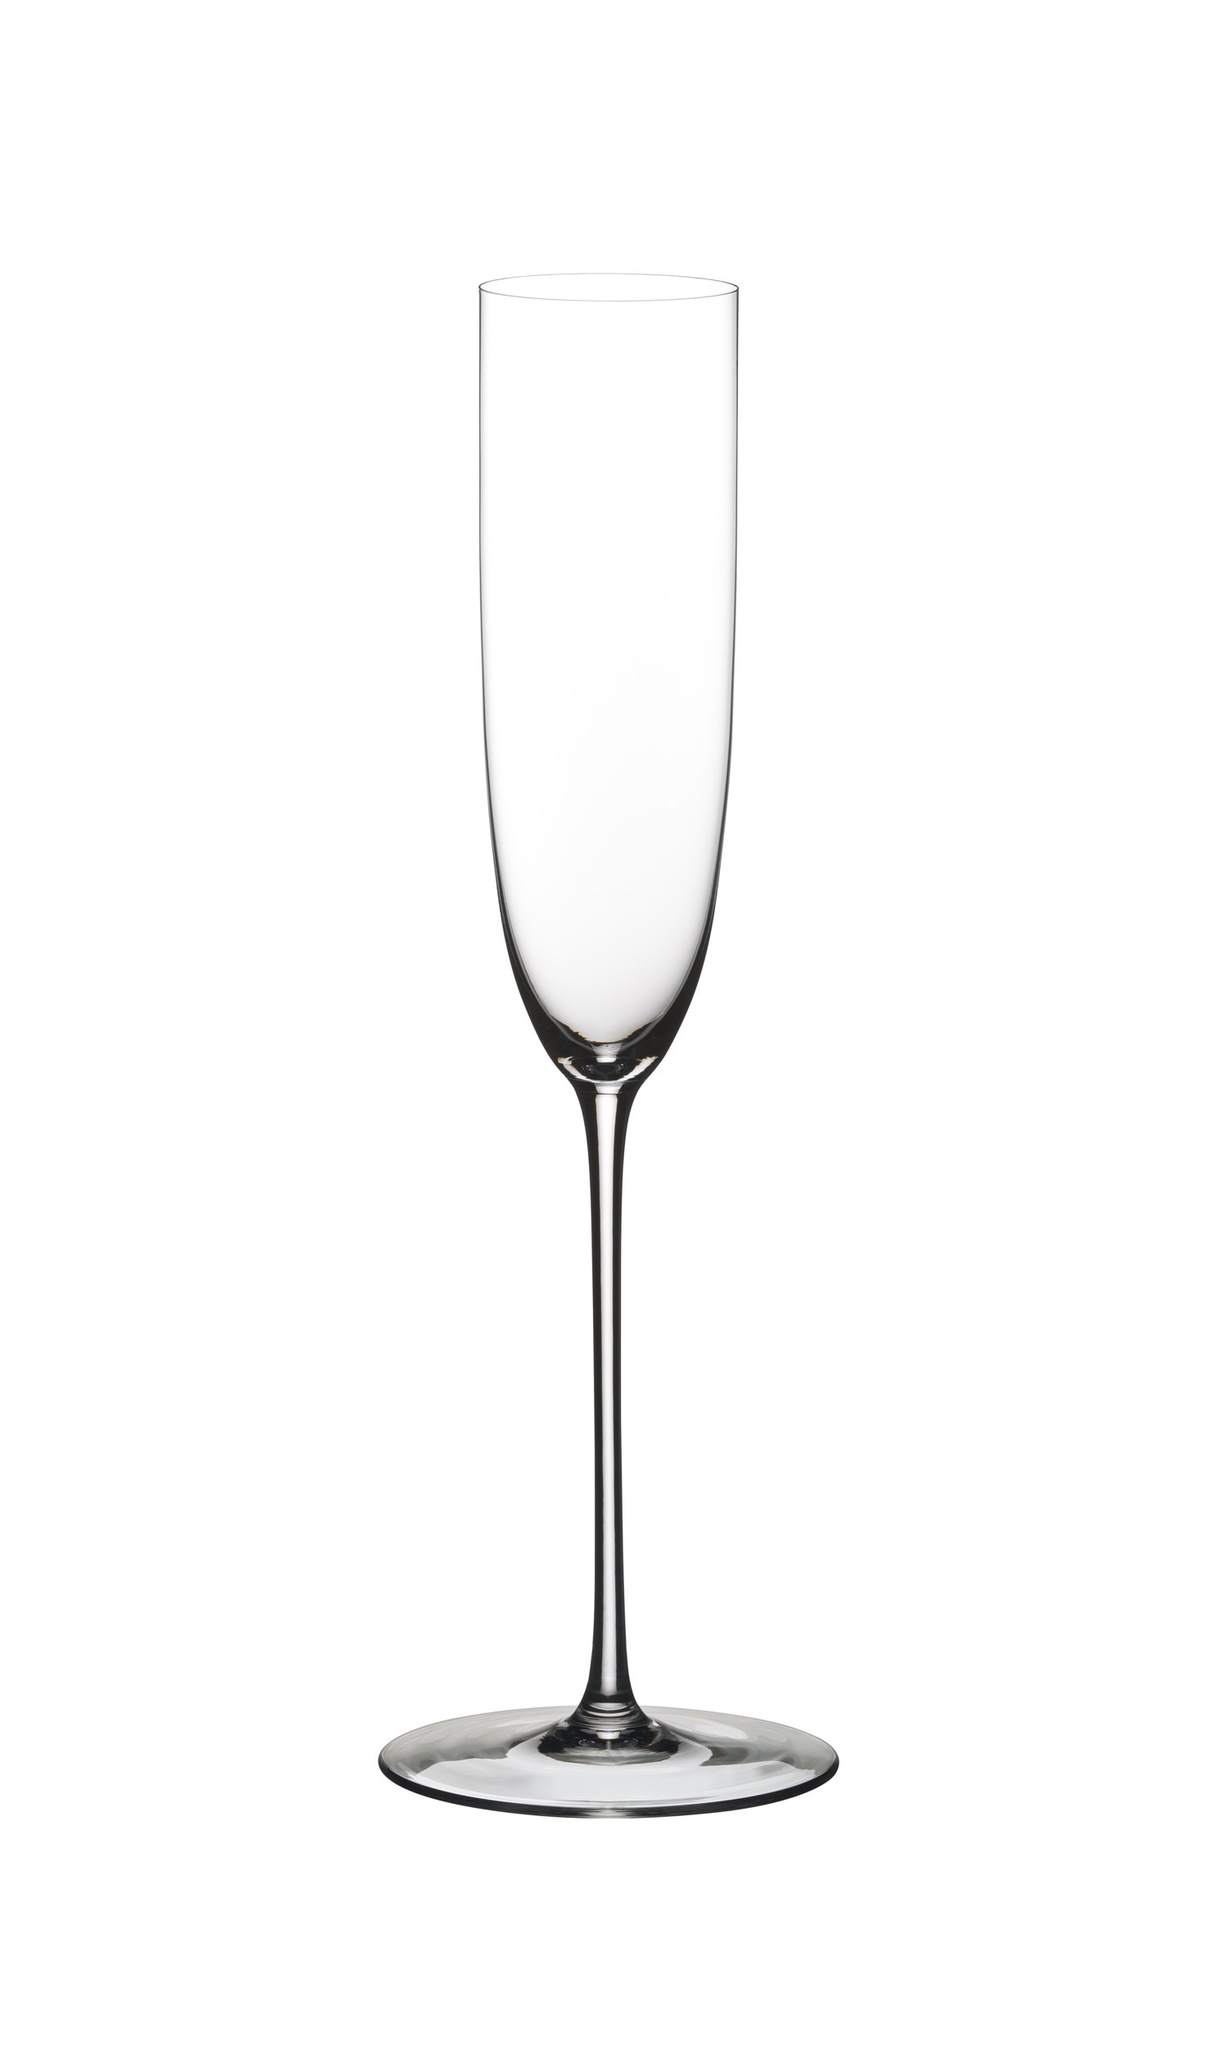 Флюте для шампанского. Бокал Riedel 4400/08 Champagne. Бокал Riedel для шампанского. Riedel бокал для коньяка Sommeliers Cognac x.o. 4400/70 170 мл. Flute бокал Riedel.